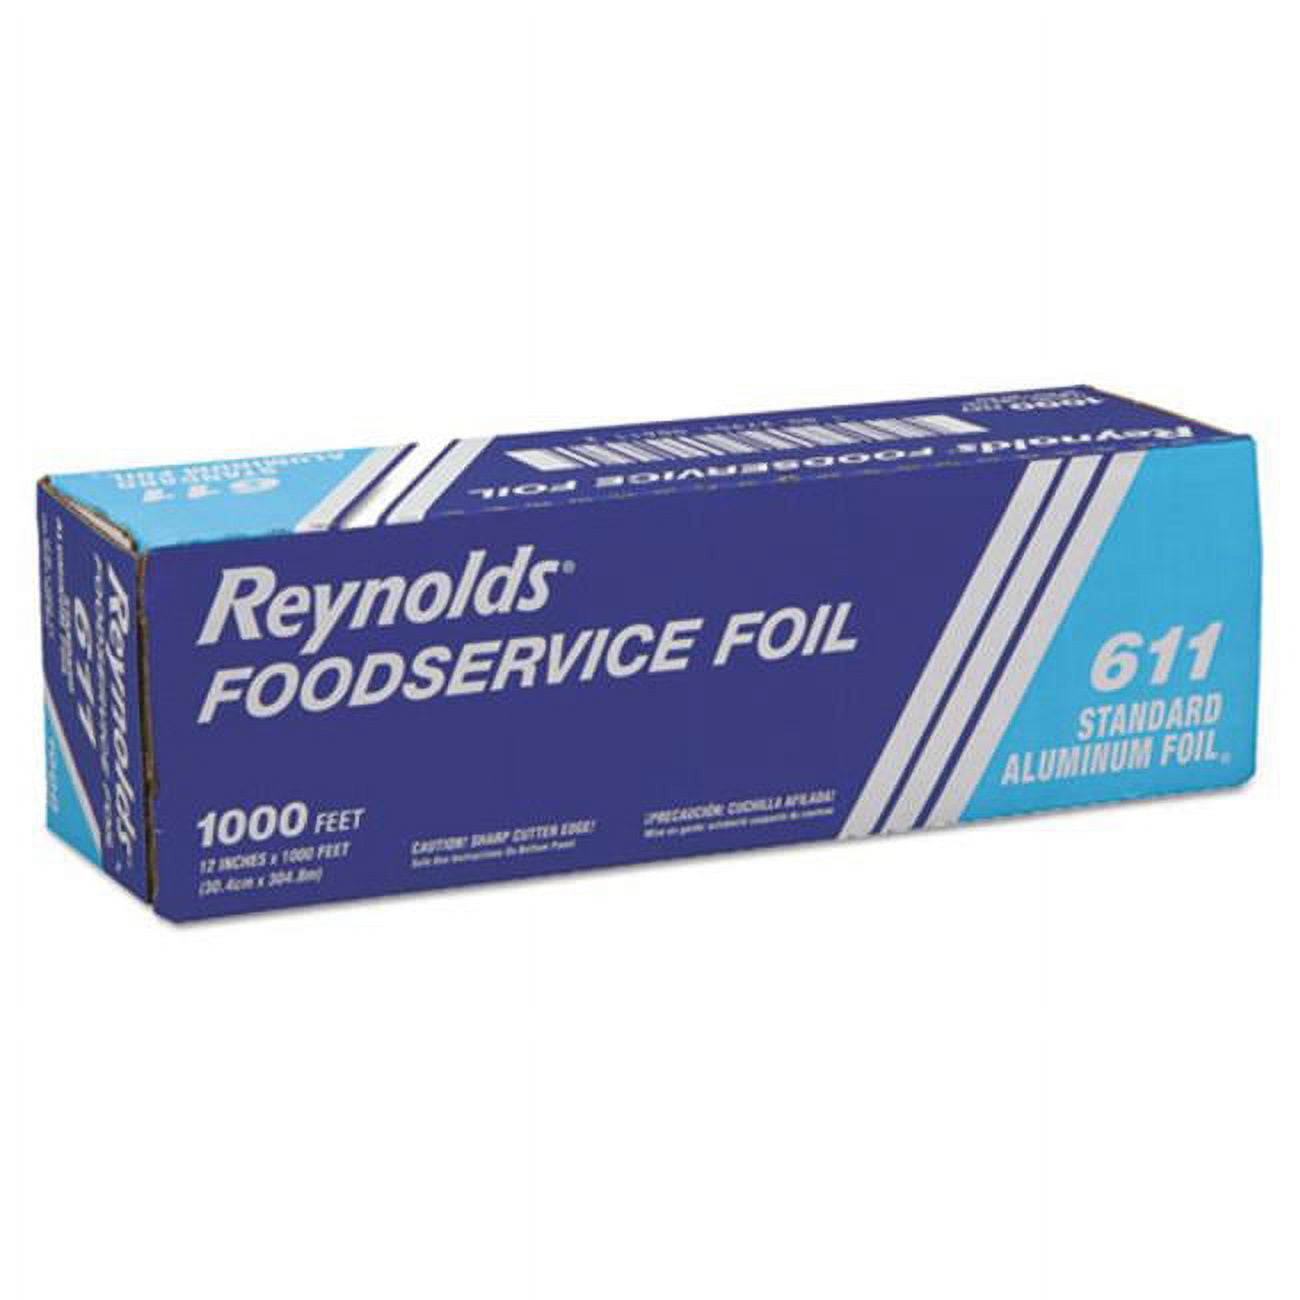 Reynolds 611m Cpc 12 In. X 2000 Ft. Metro Aluminum Foil Rolls, Silver